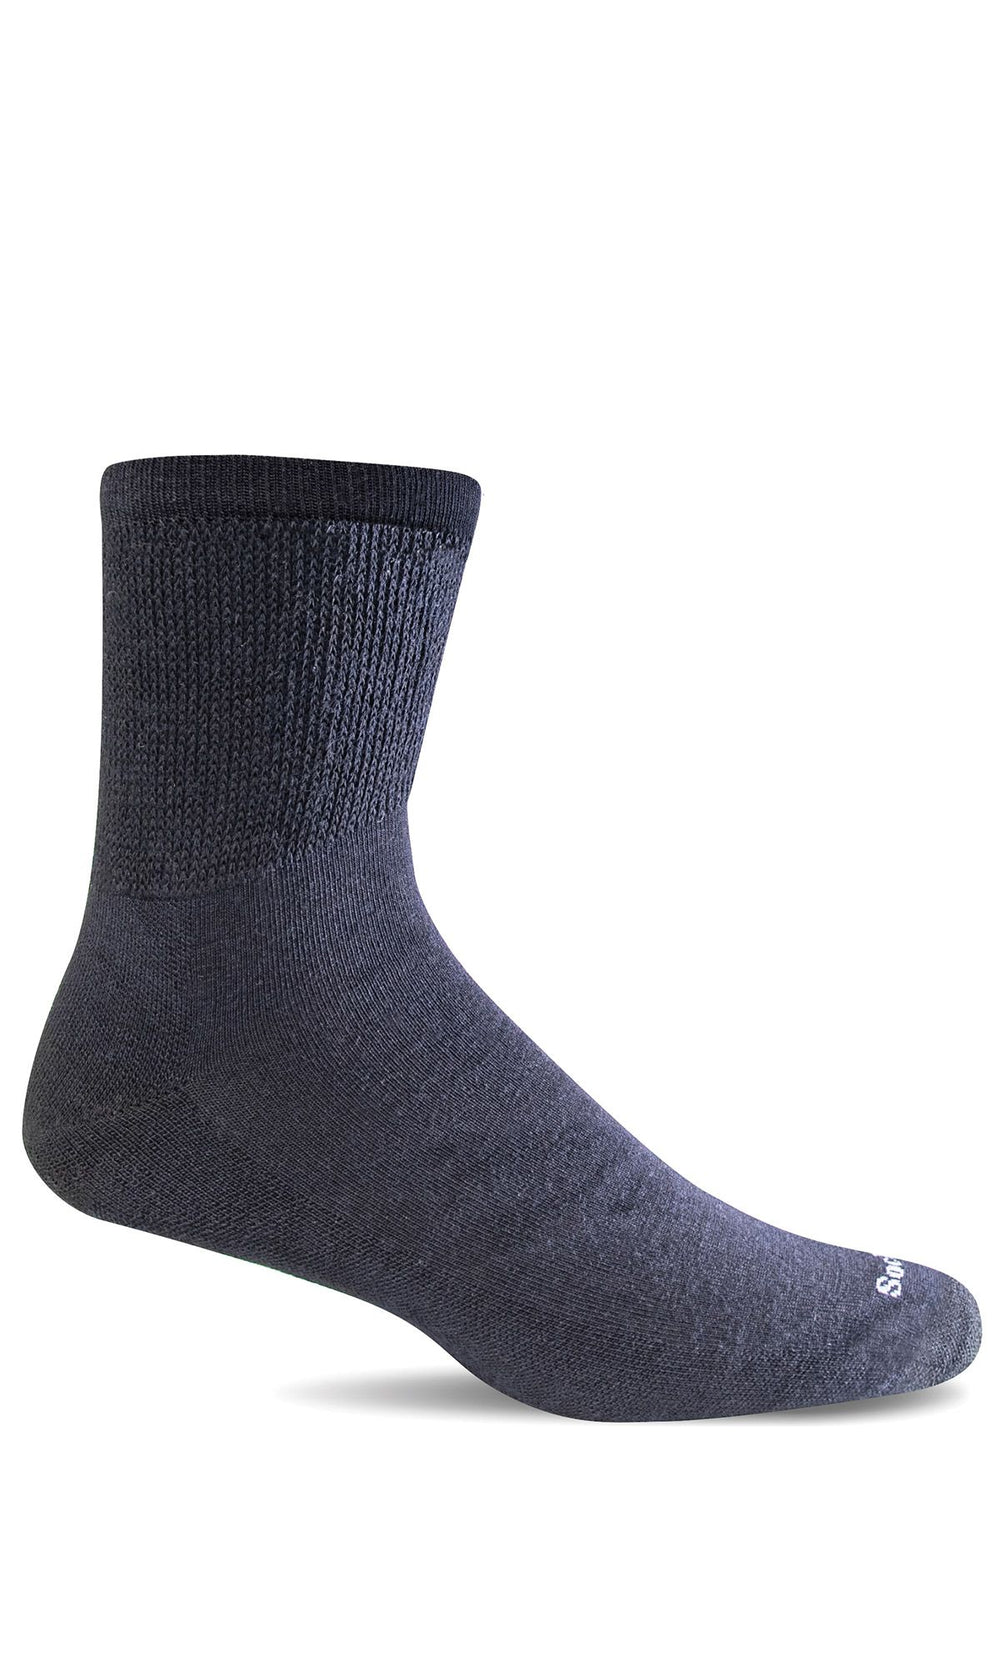 Sockwell Extra Easy Relaxed Fit Socks (Women's)